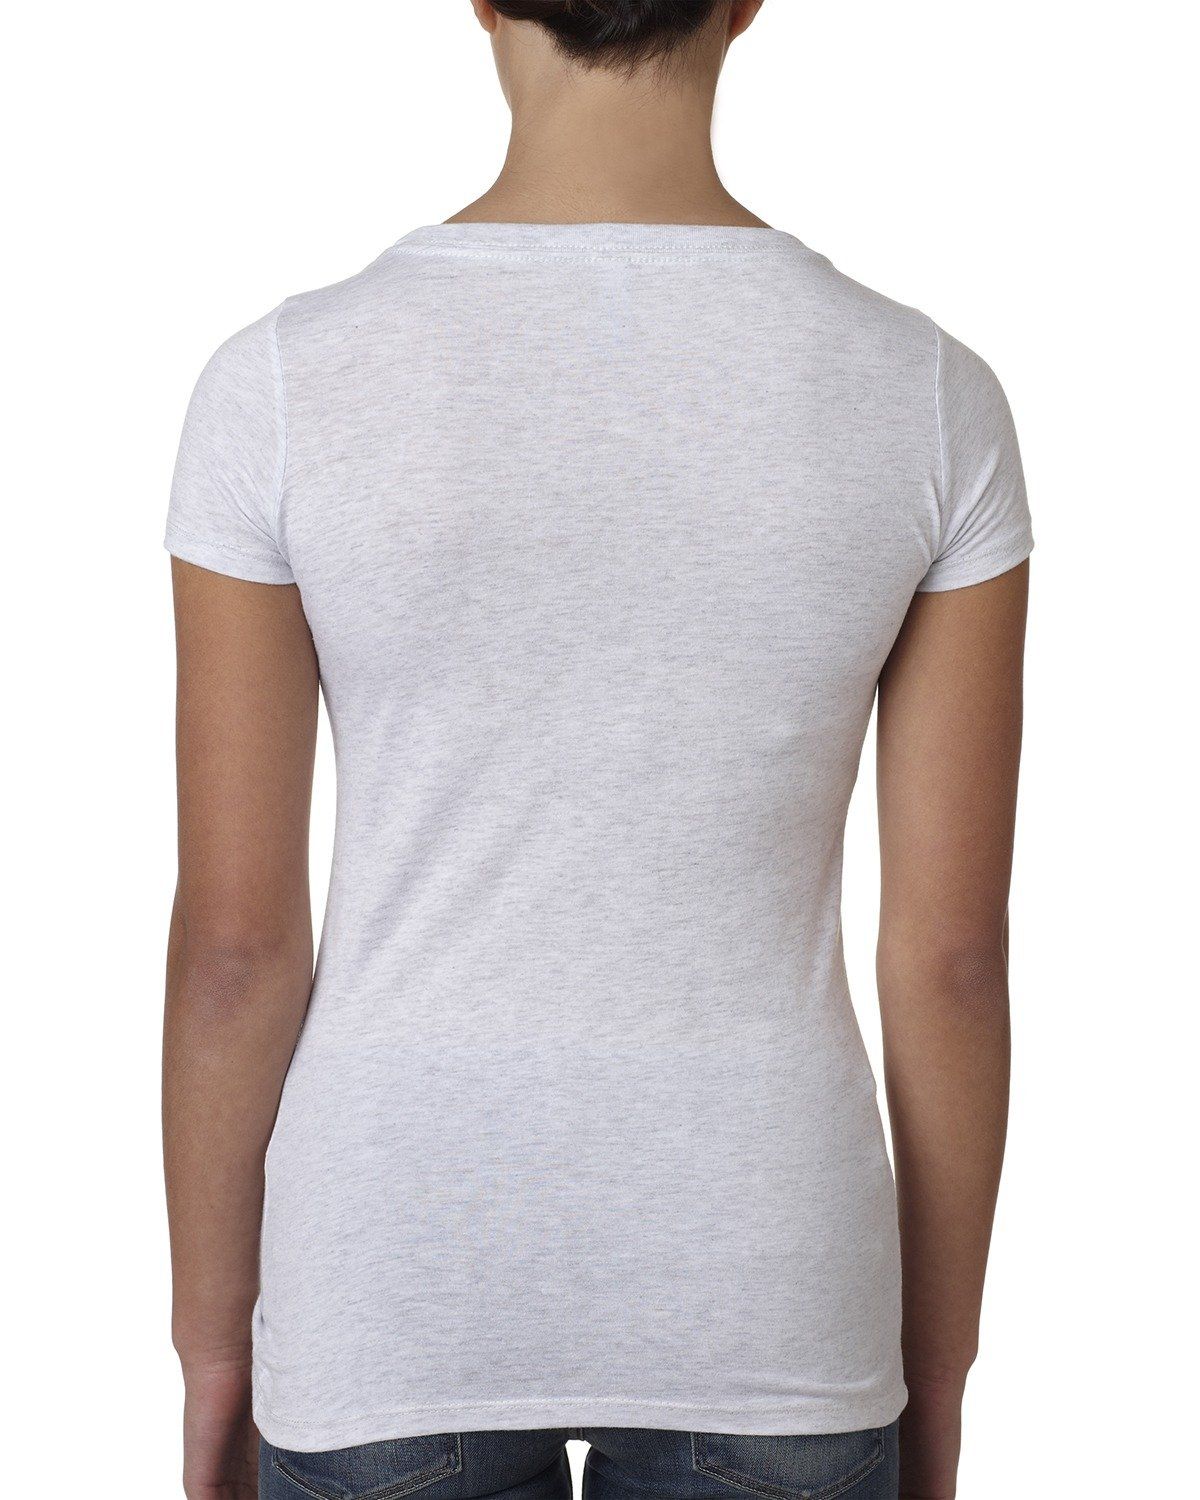 'Next Level 6730 Ladies Rayon Triblend Cotton Scoop T-Shirt'